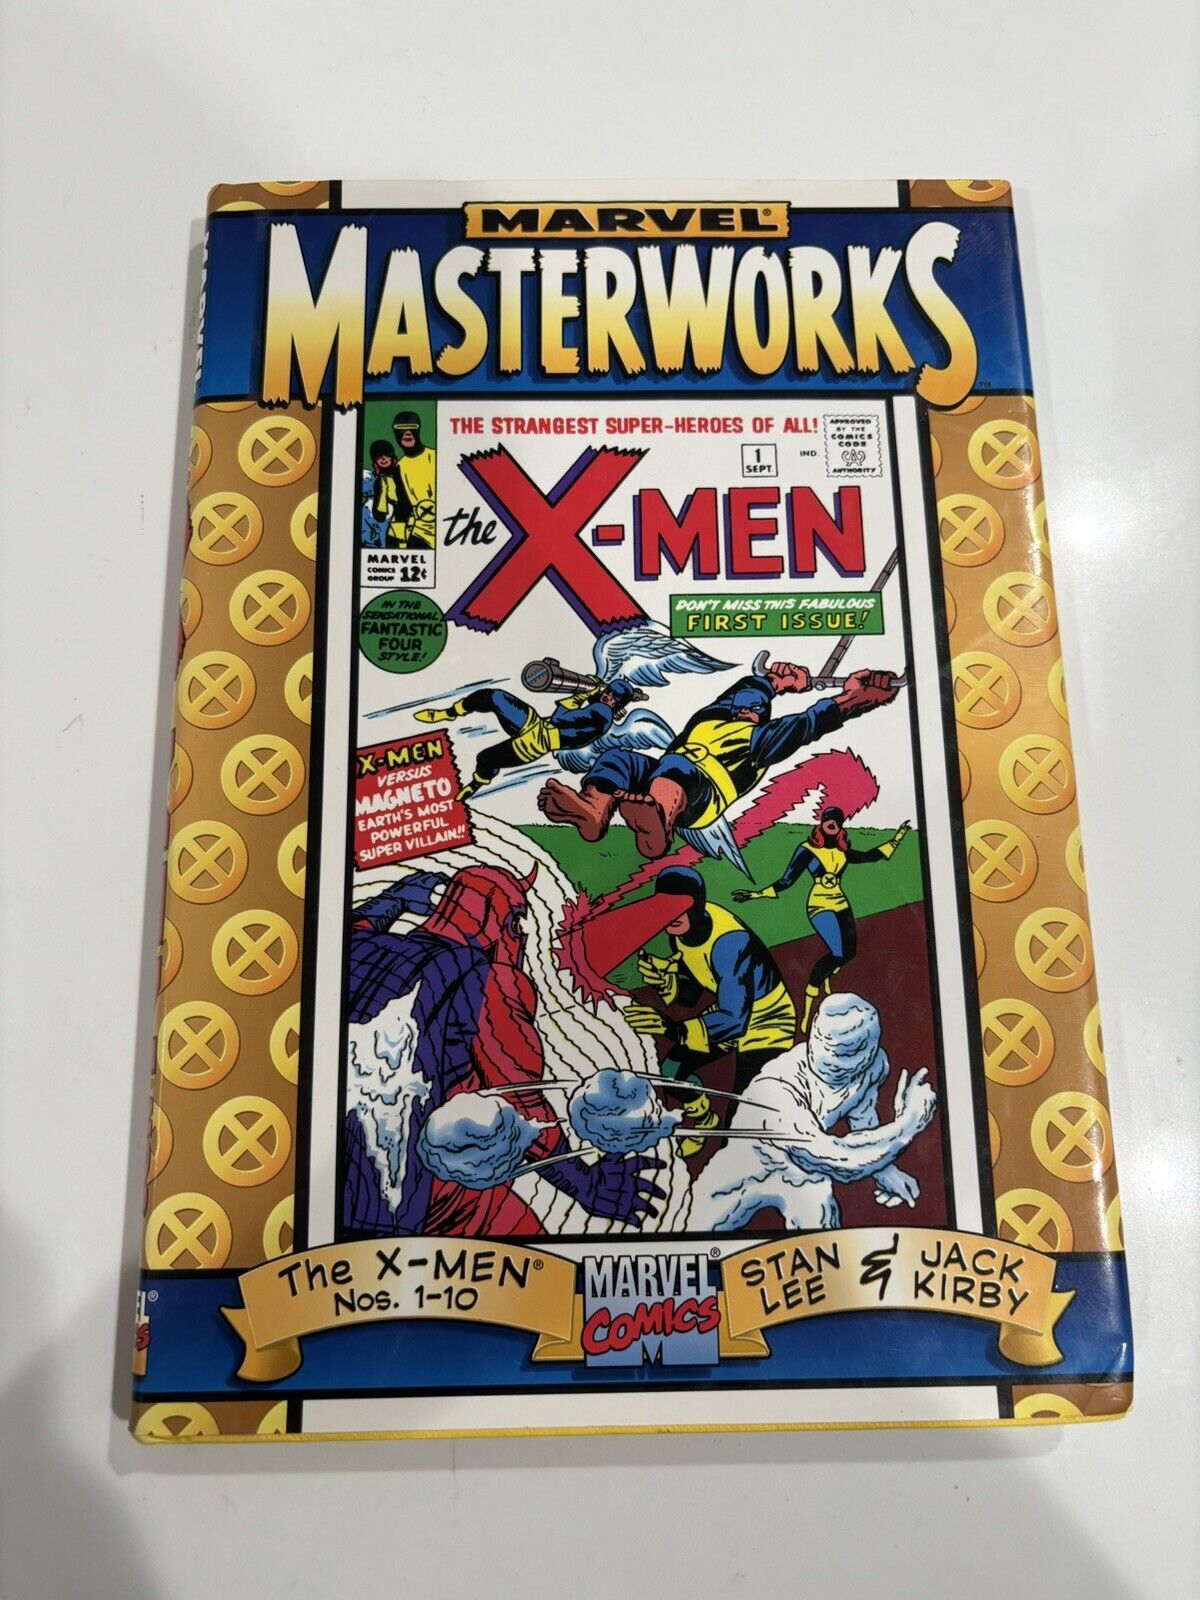 MARVEL MASTERWORKS THE X-MEN NOS. 1 - 10 MARVEL COMICS HARDCOVER